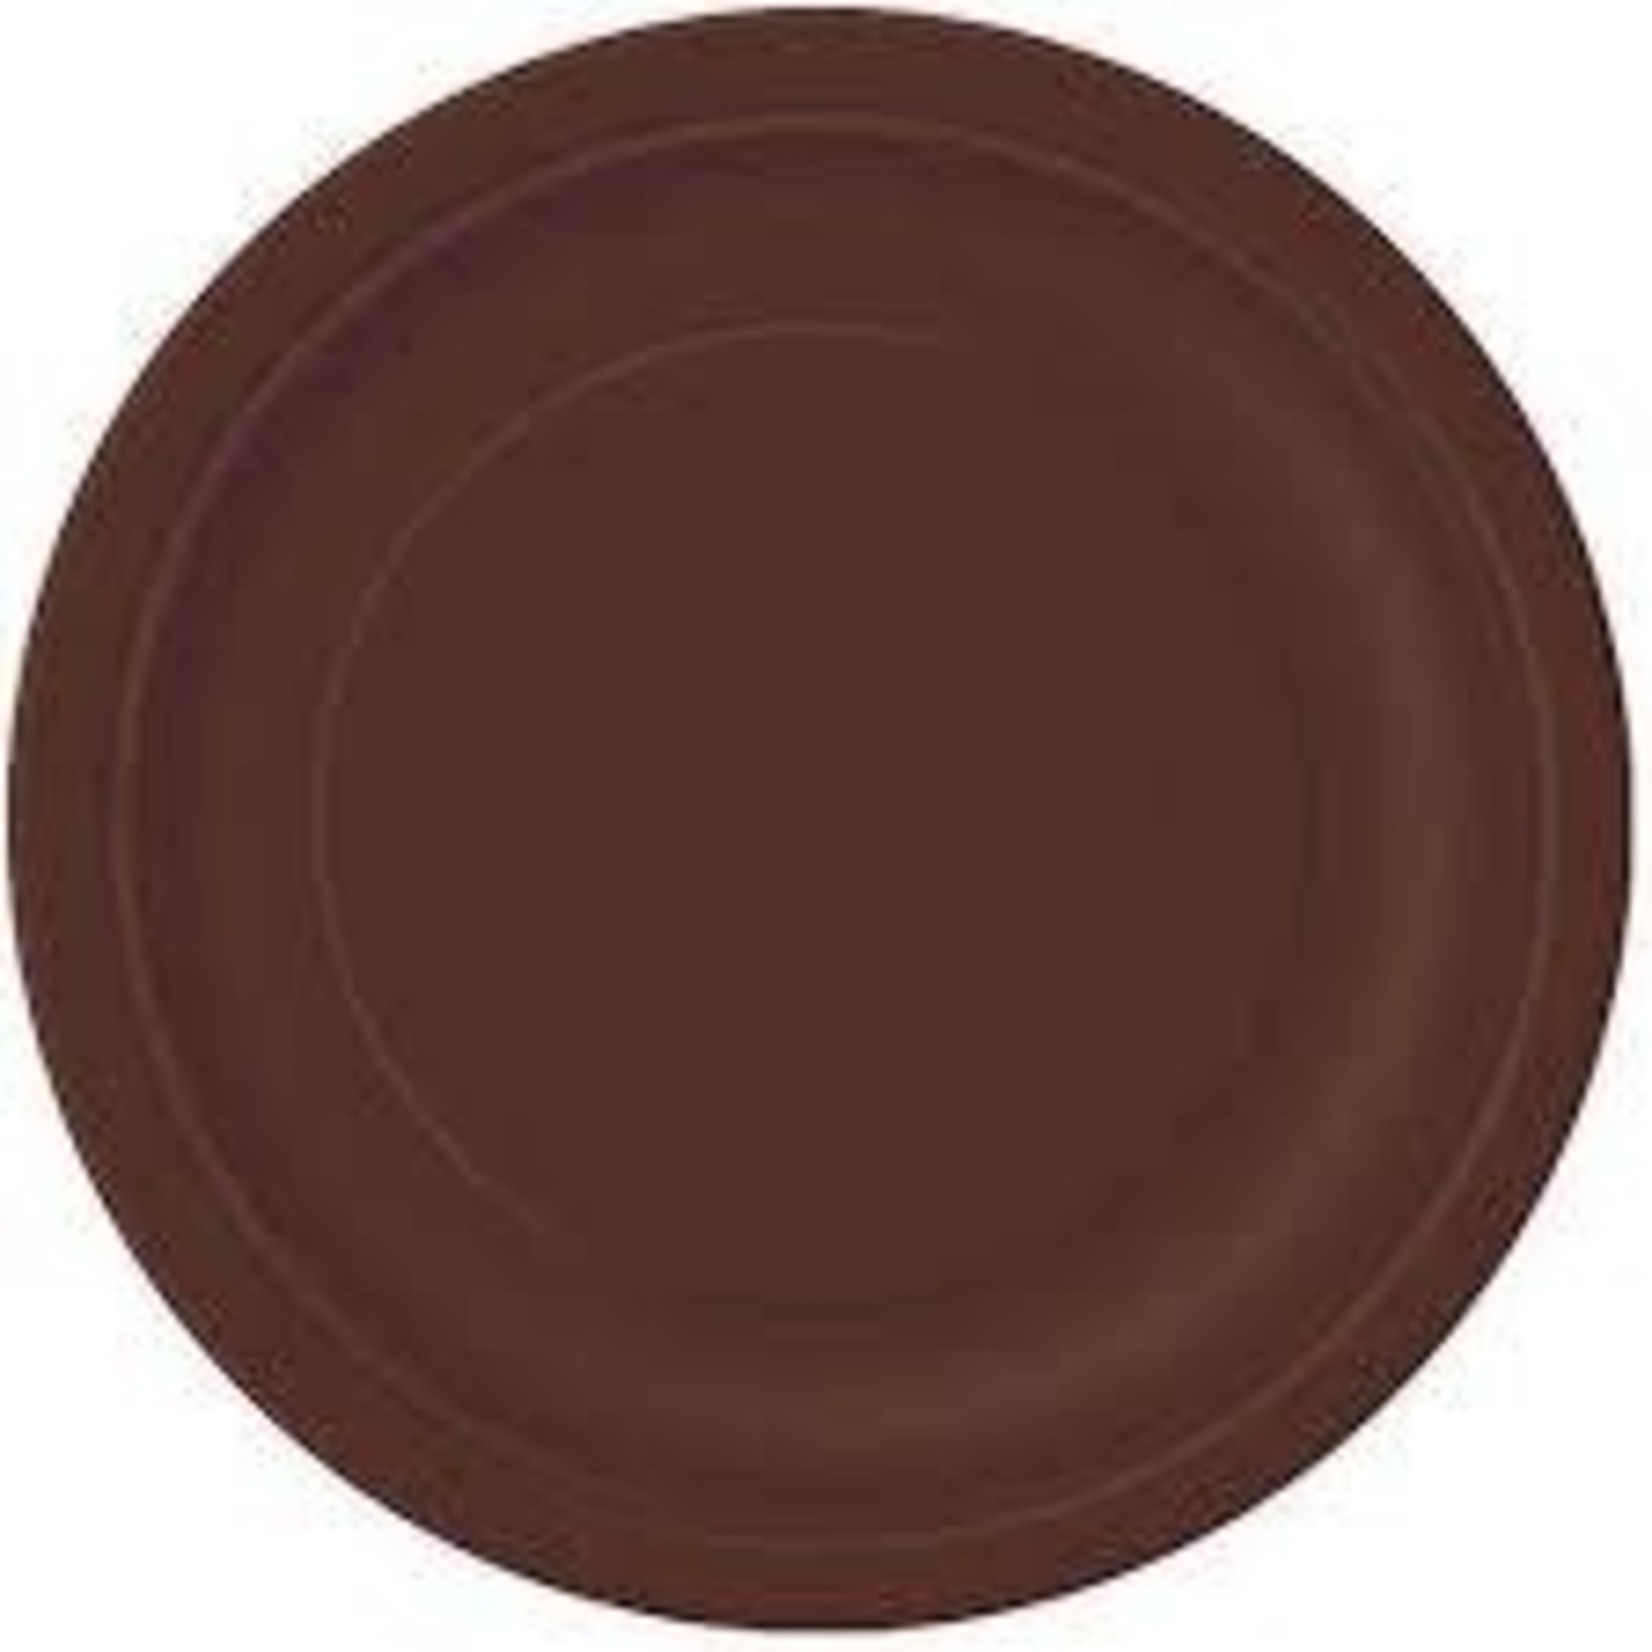 Brown Plastic Plates 50ct